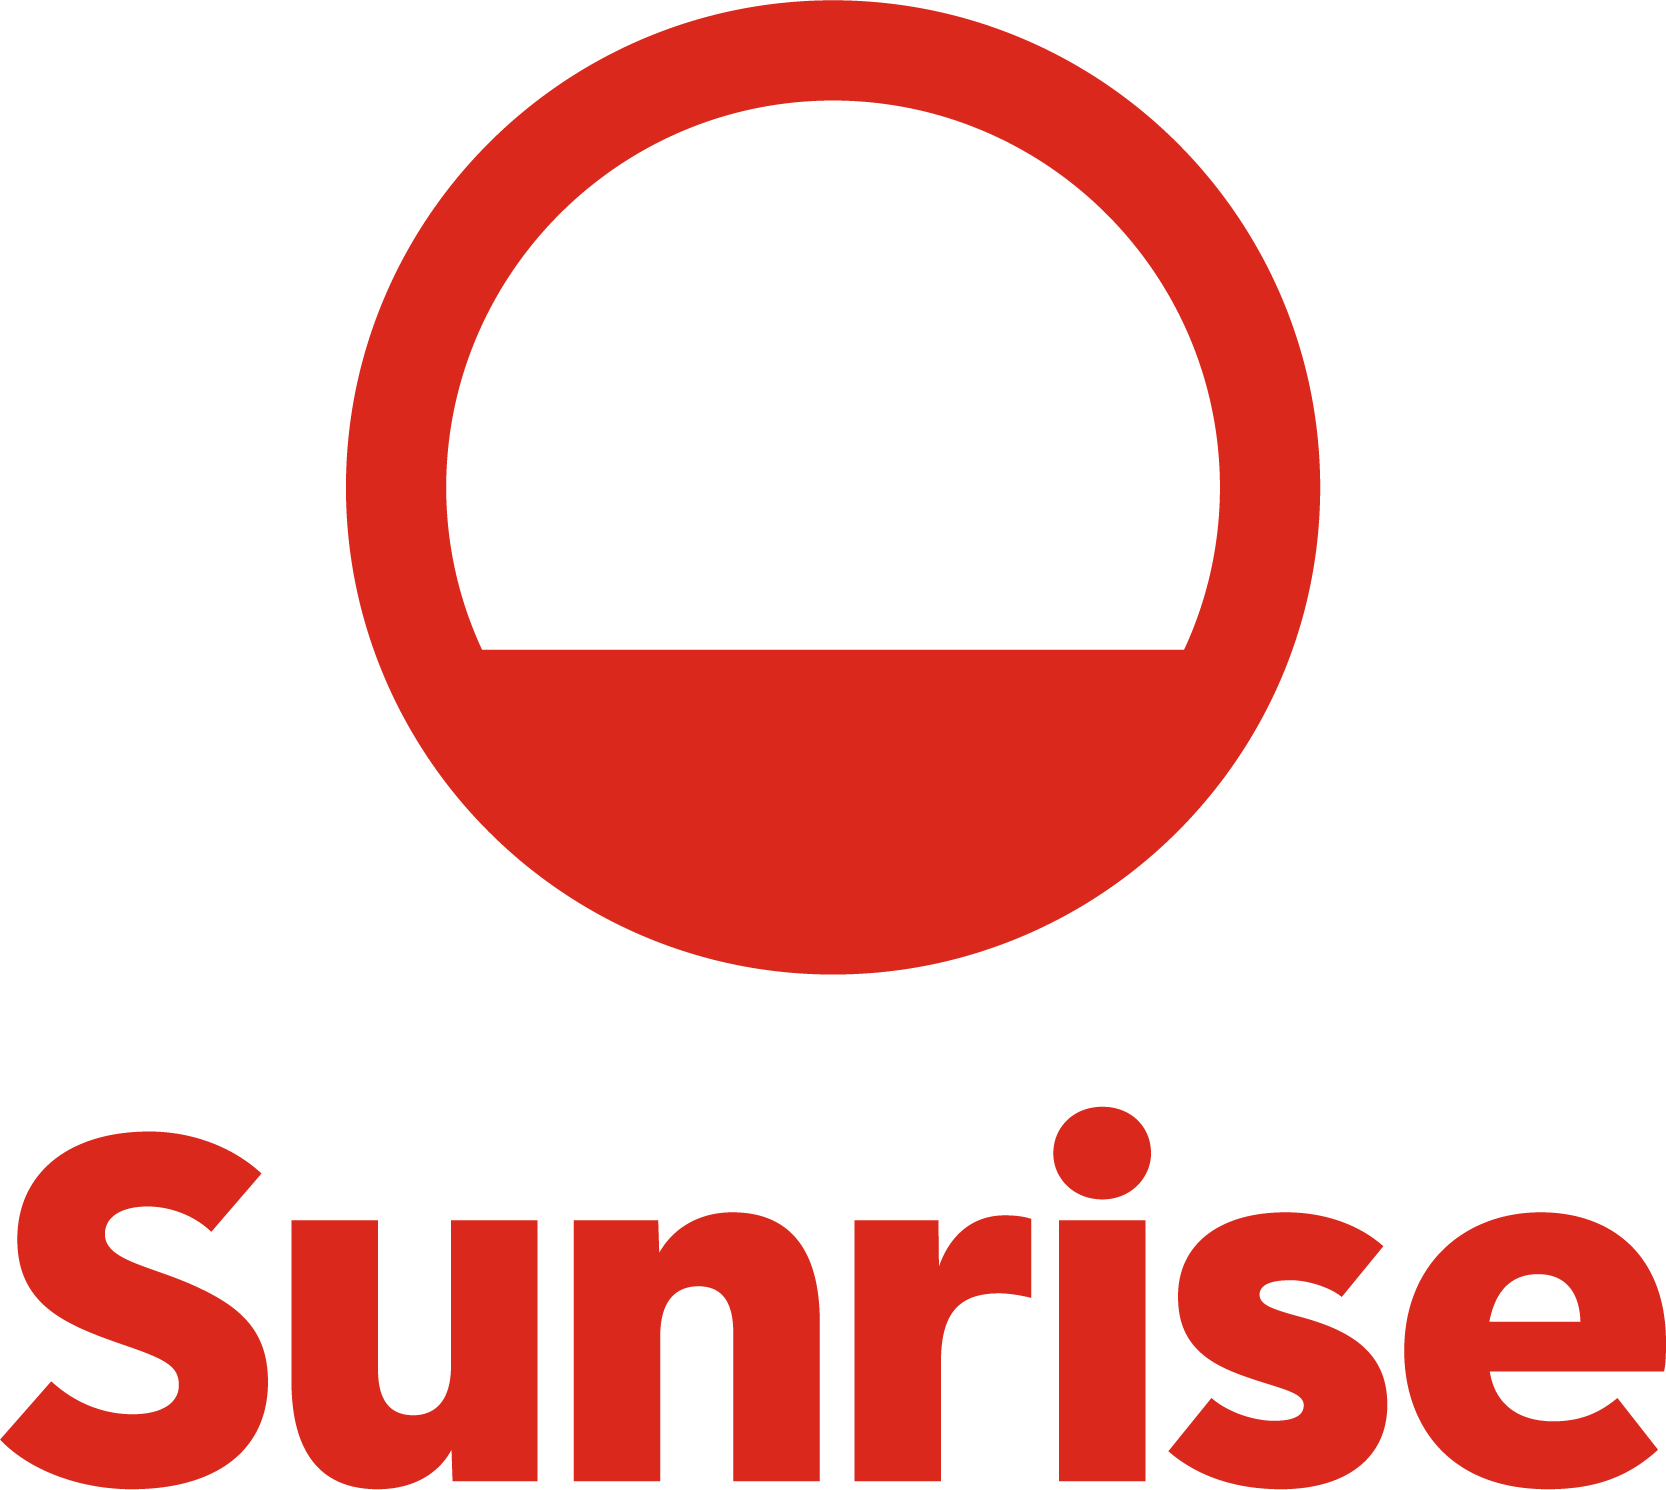 Sunrise GmbH